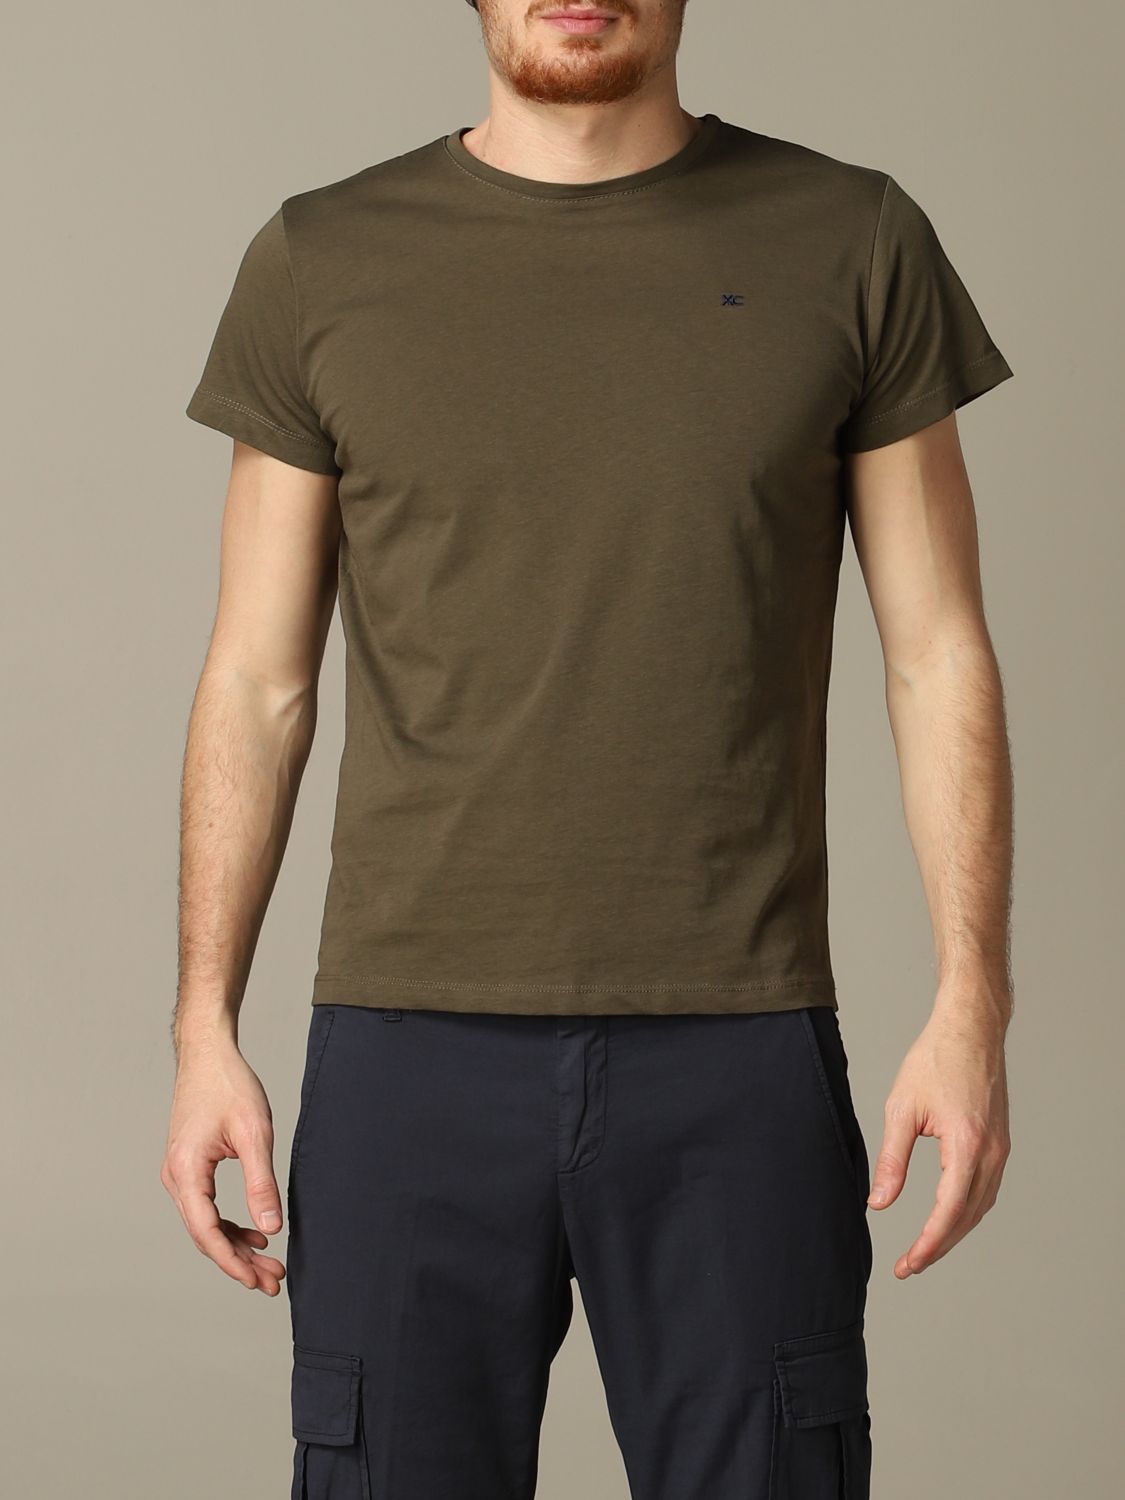 Xc T-Shirt XC Men colour Military